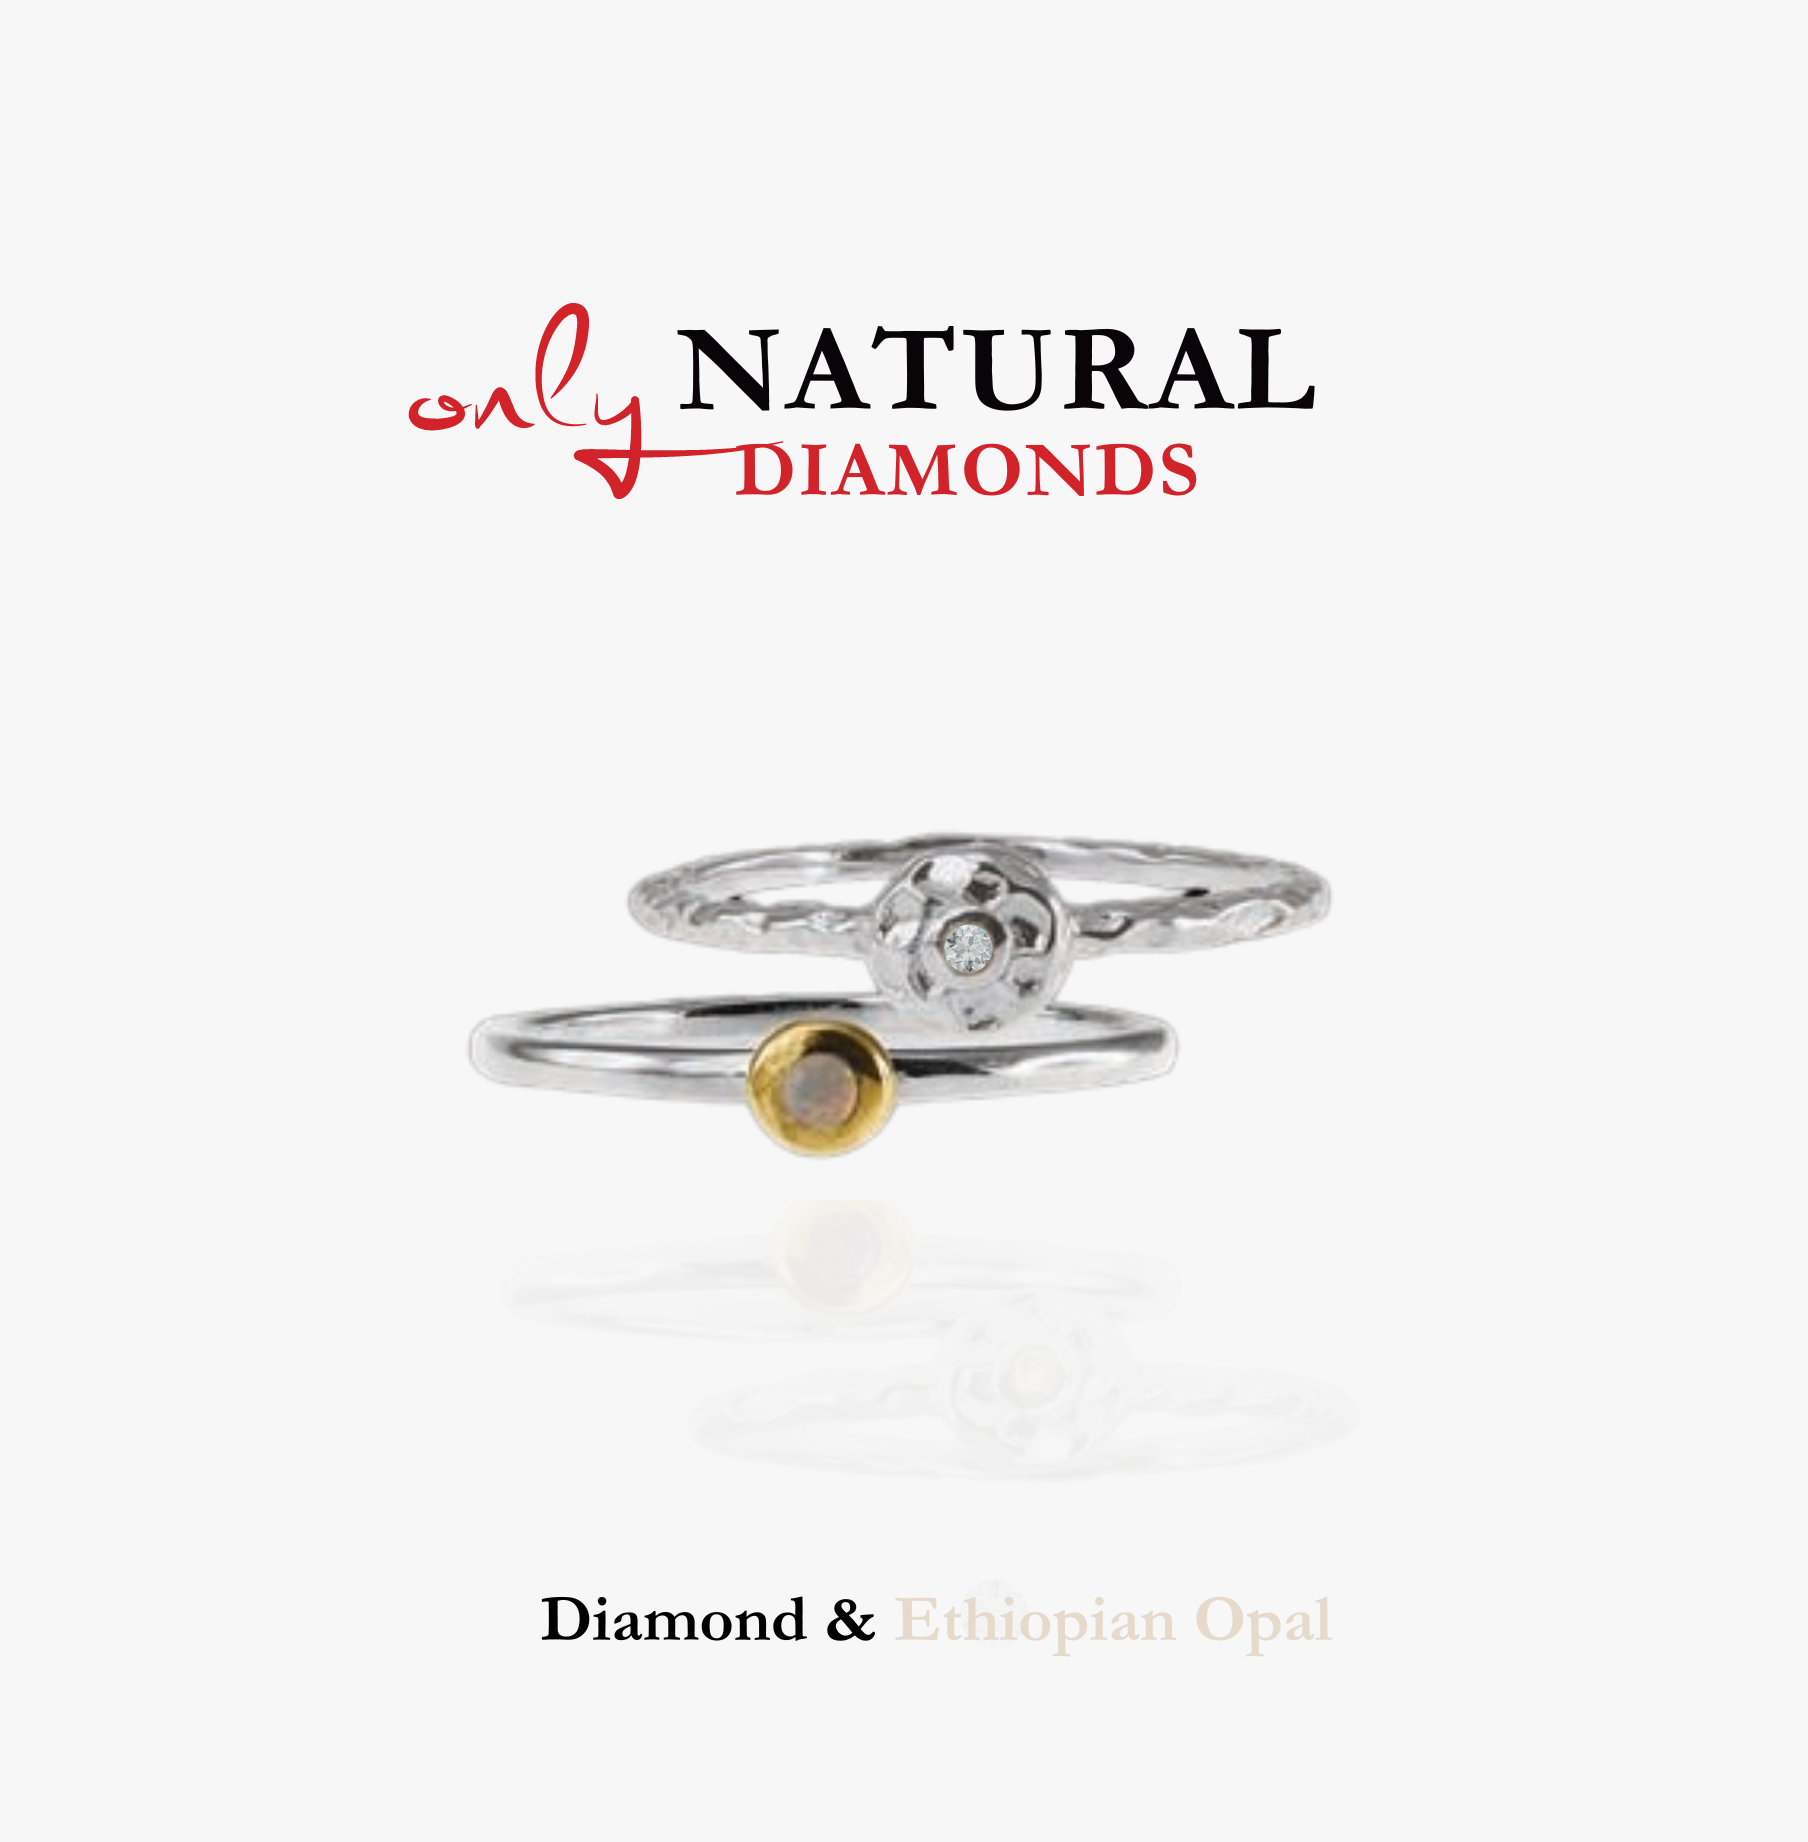 Diamond & Ethiopian Opal Rings